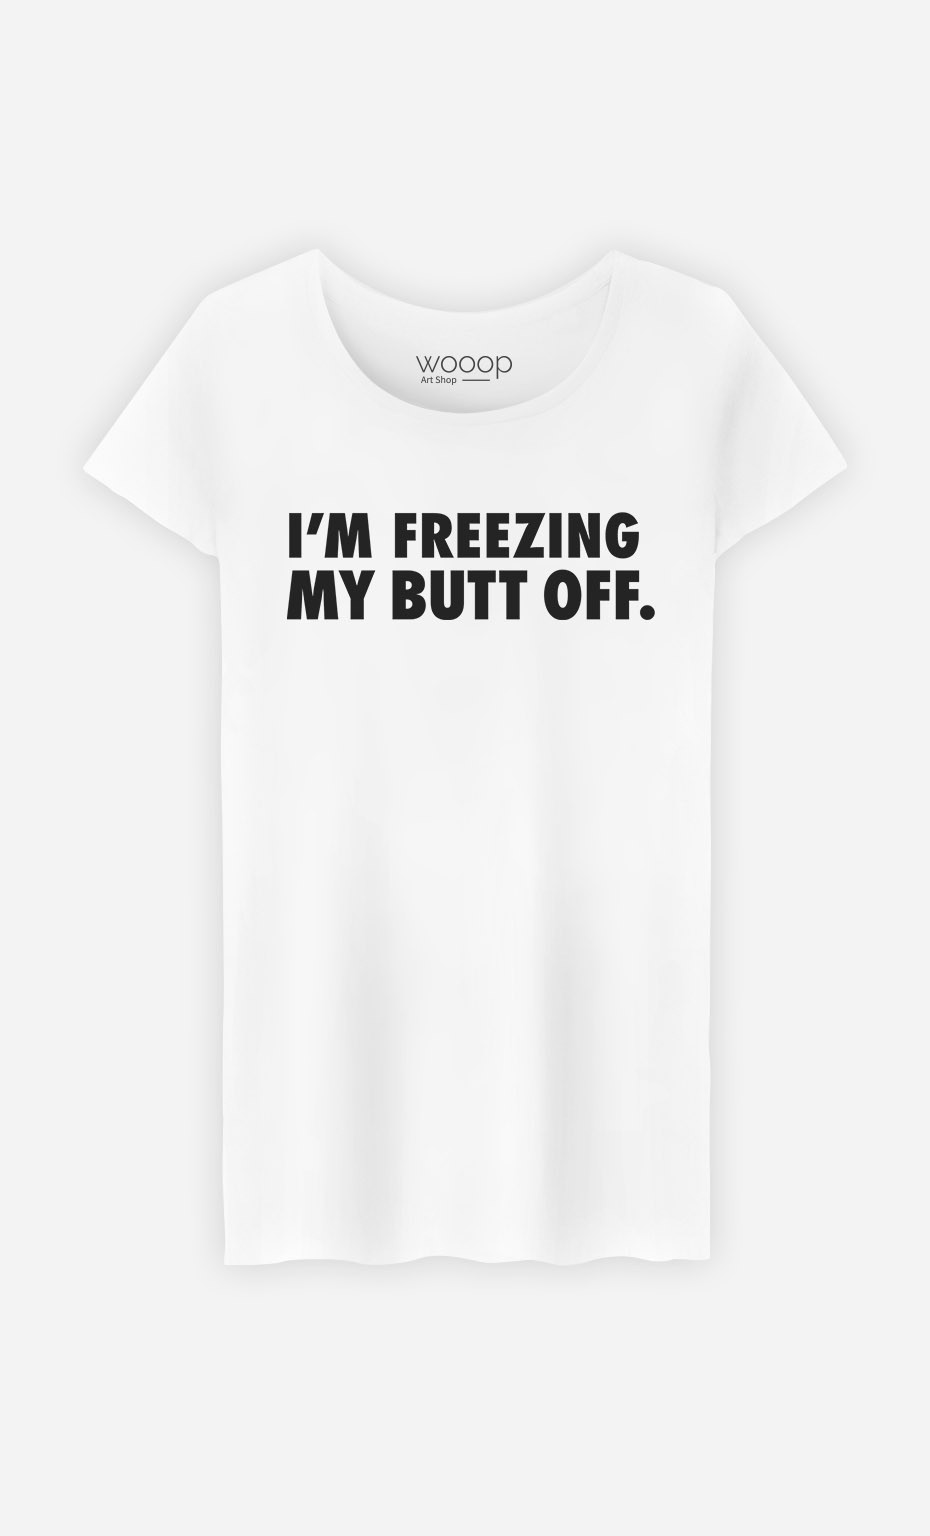 T-Shirt I'm freezing my butt off